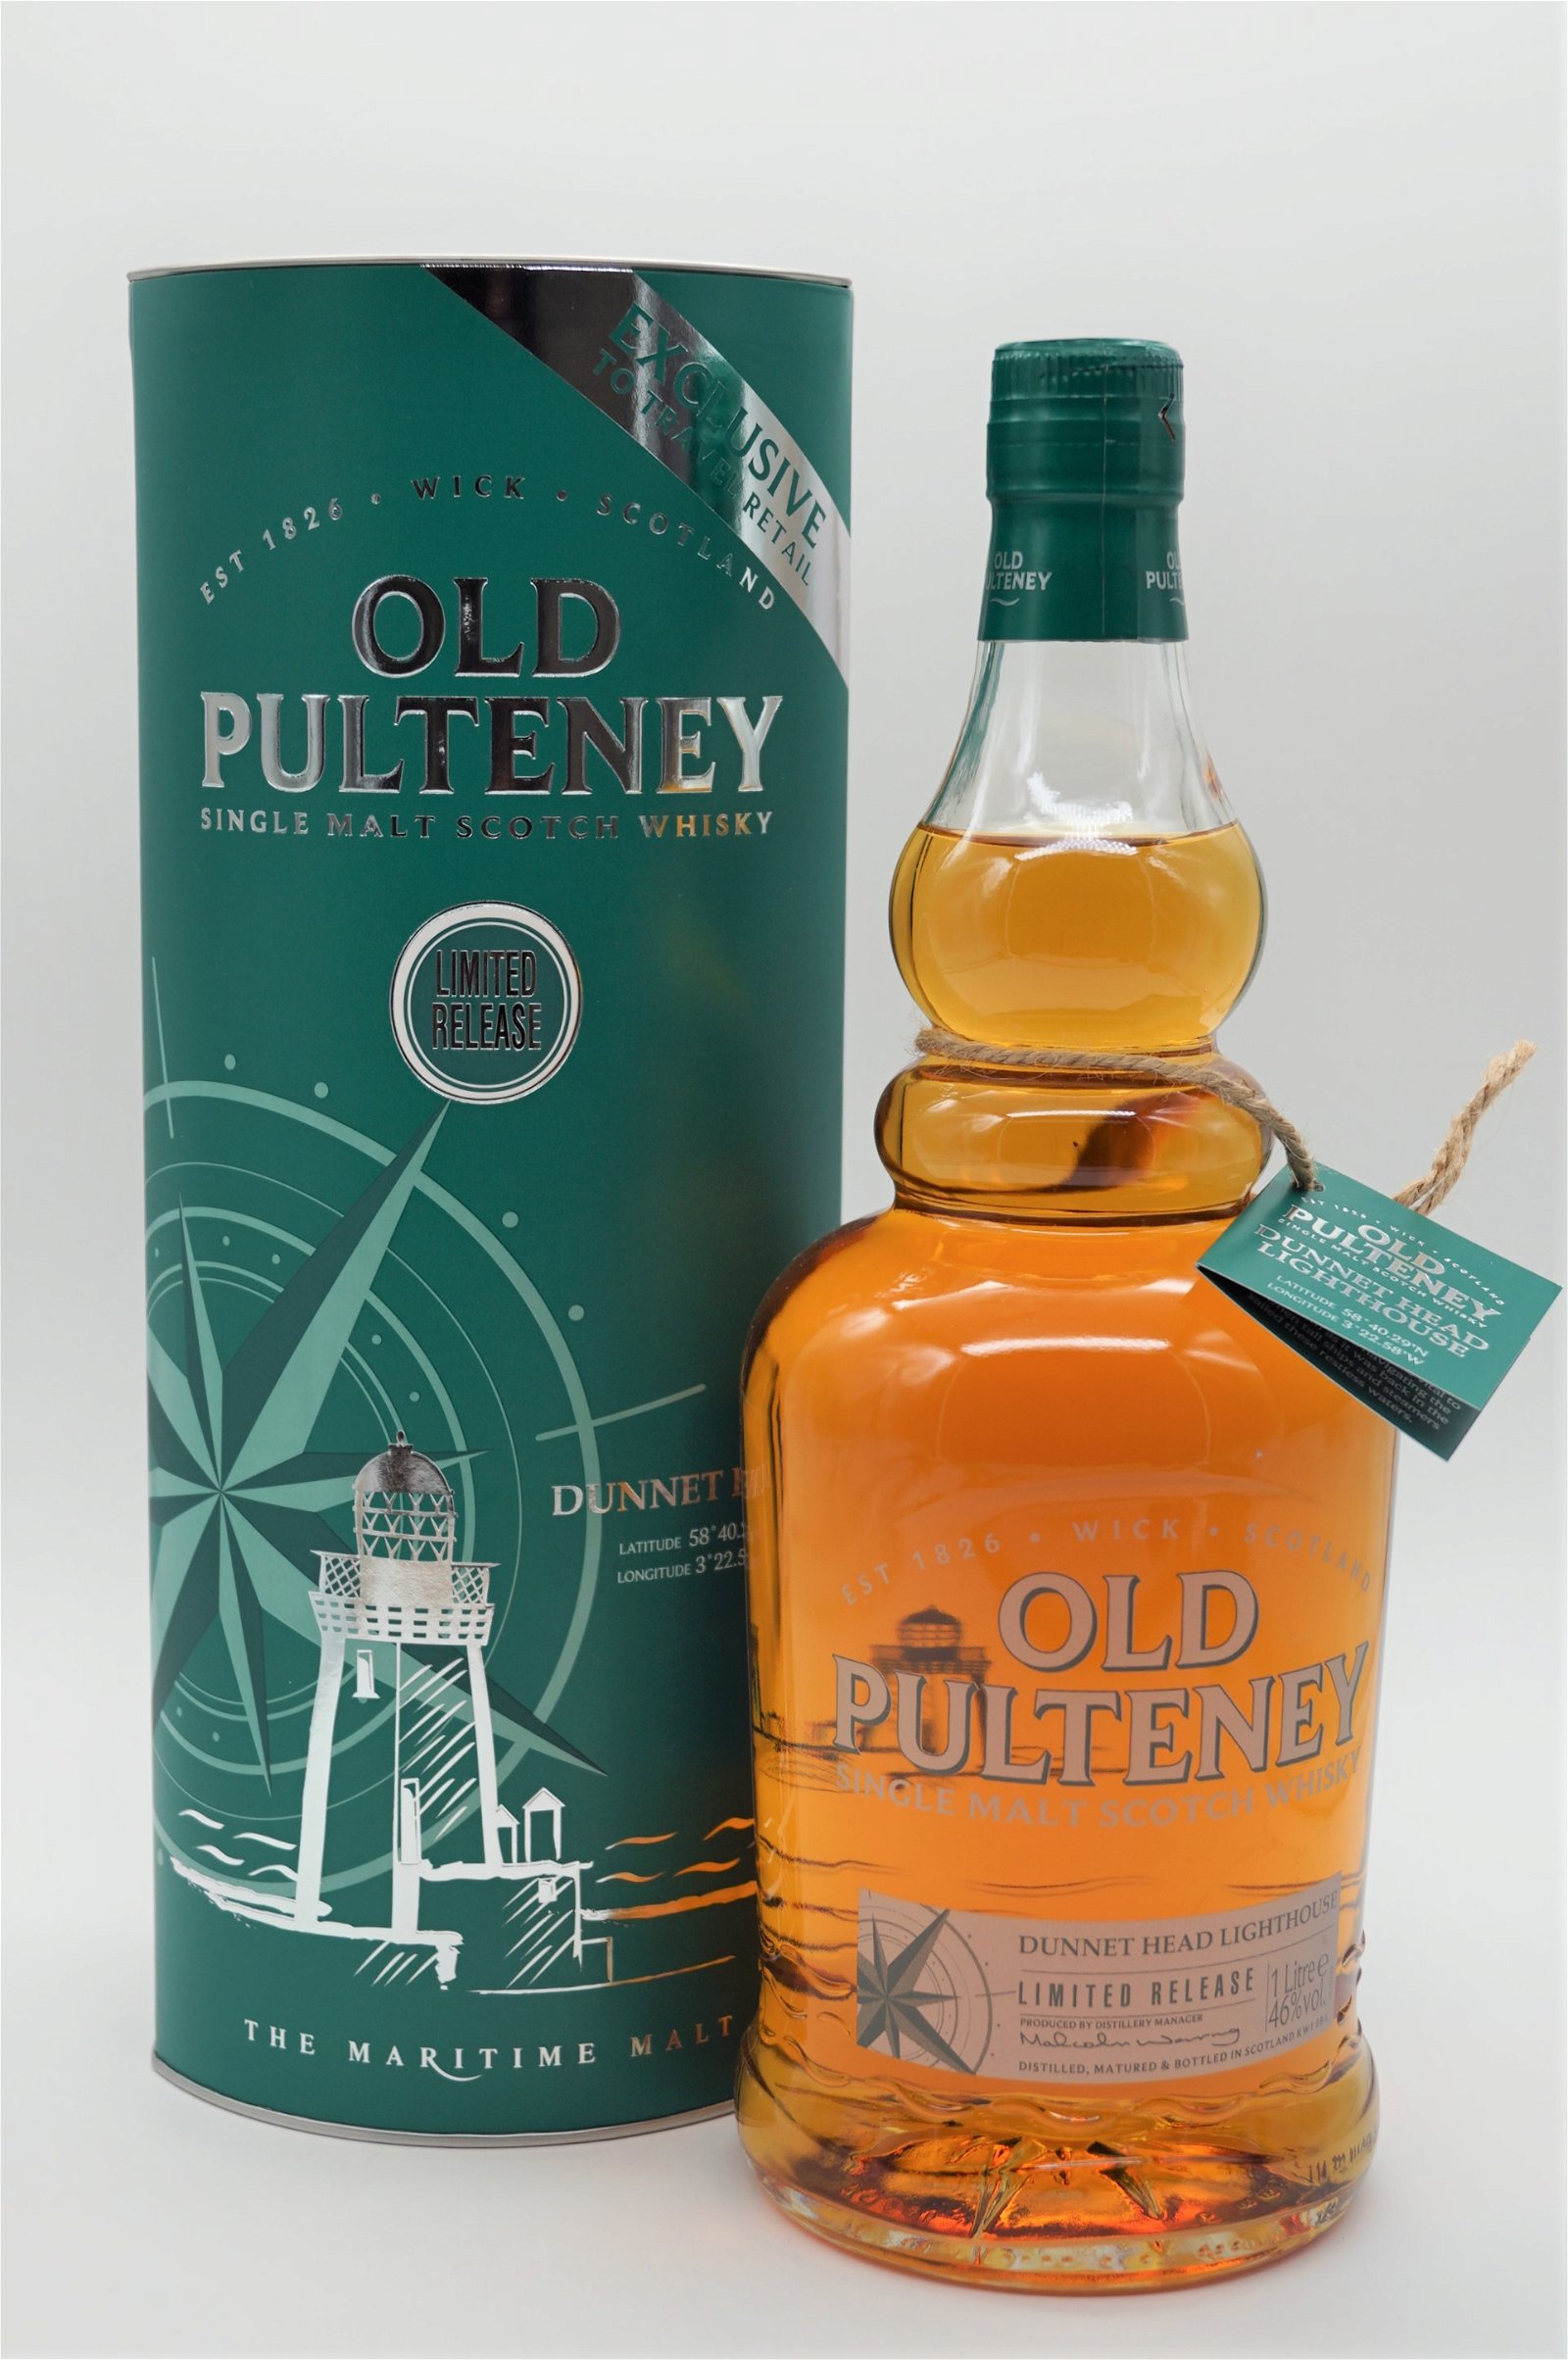 Old Pulteney Dunnet Head Limited Release Single Malt Scotch Whisky